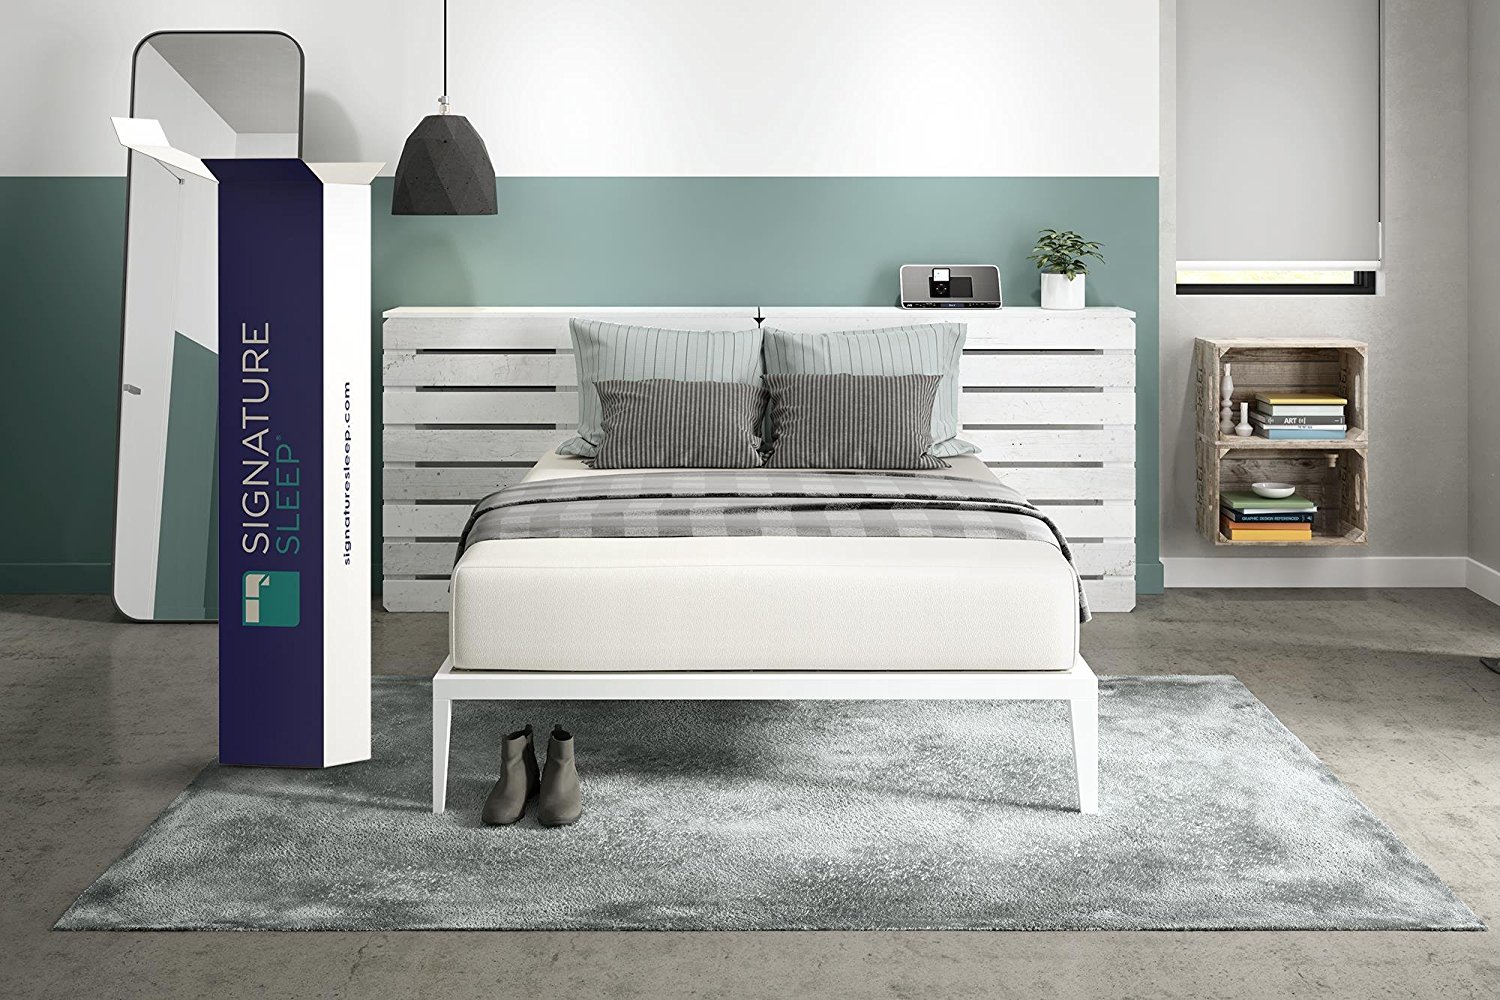 Signature Sleep Vs Zinus 12 inch memory foam mattress Reviews